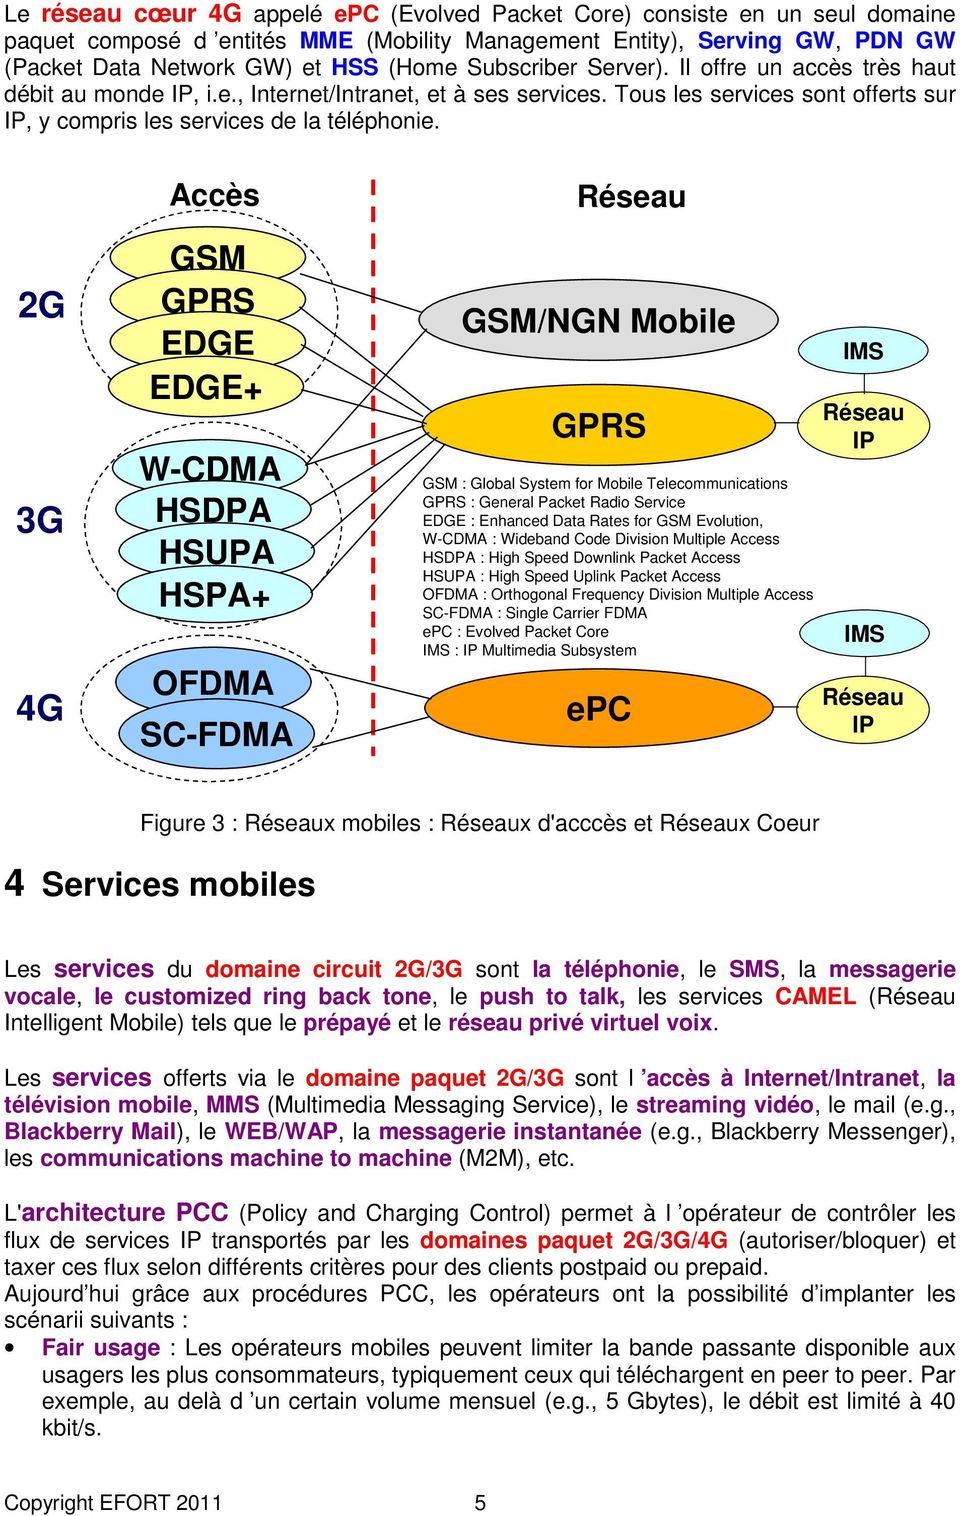 2G 3G 4G Accès GSM GPRS EDGE EDGE+ W-CDMA HSDPA HSUPA HSPA+ OFDMA SC-FDMA Réseau GSM/NGN Mobile GPRS GSM : Global System for Mobile Telecommunications GPRS : General Packet Radio Service EDGE :